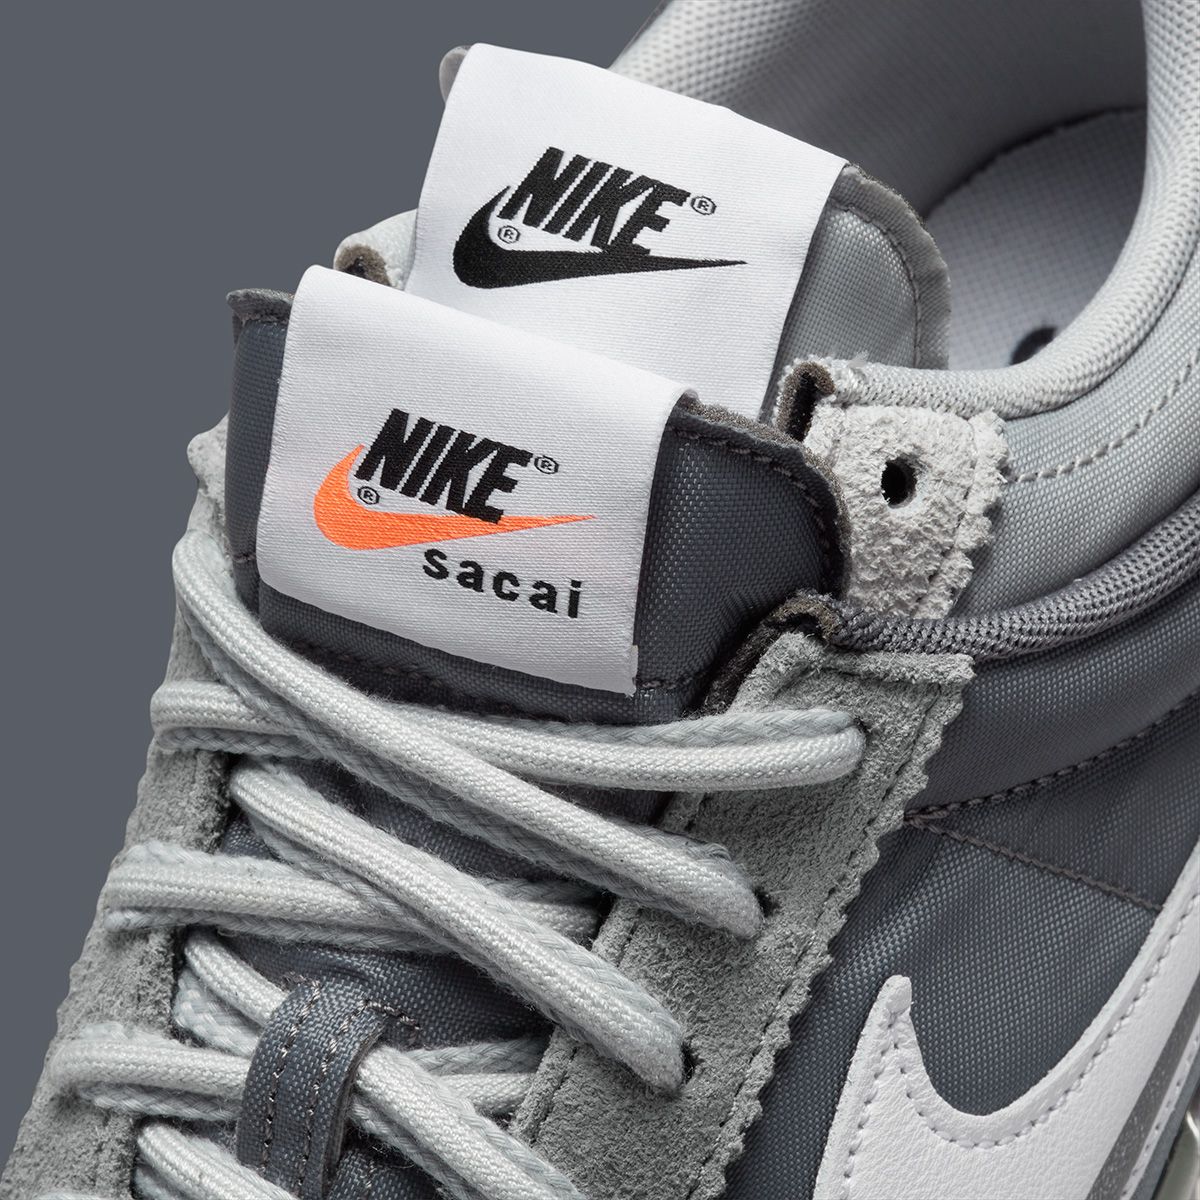 Where to Buy the sacai x Nike Cortez “Iron Grey” | House of Heat°